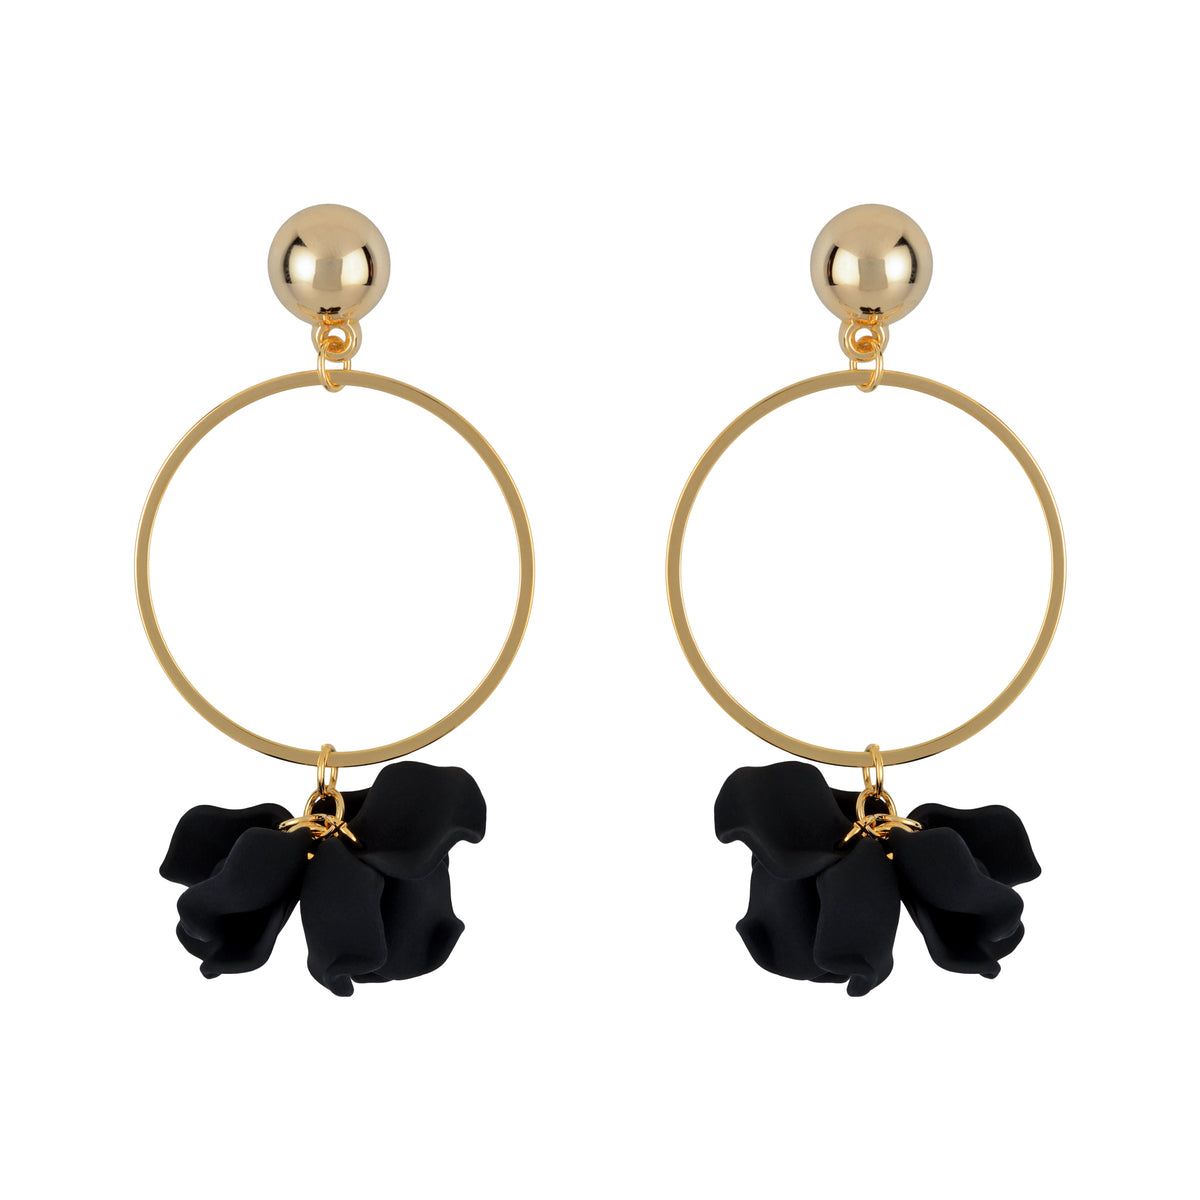 Suspended Gold Ring Petal Earrings - Black